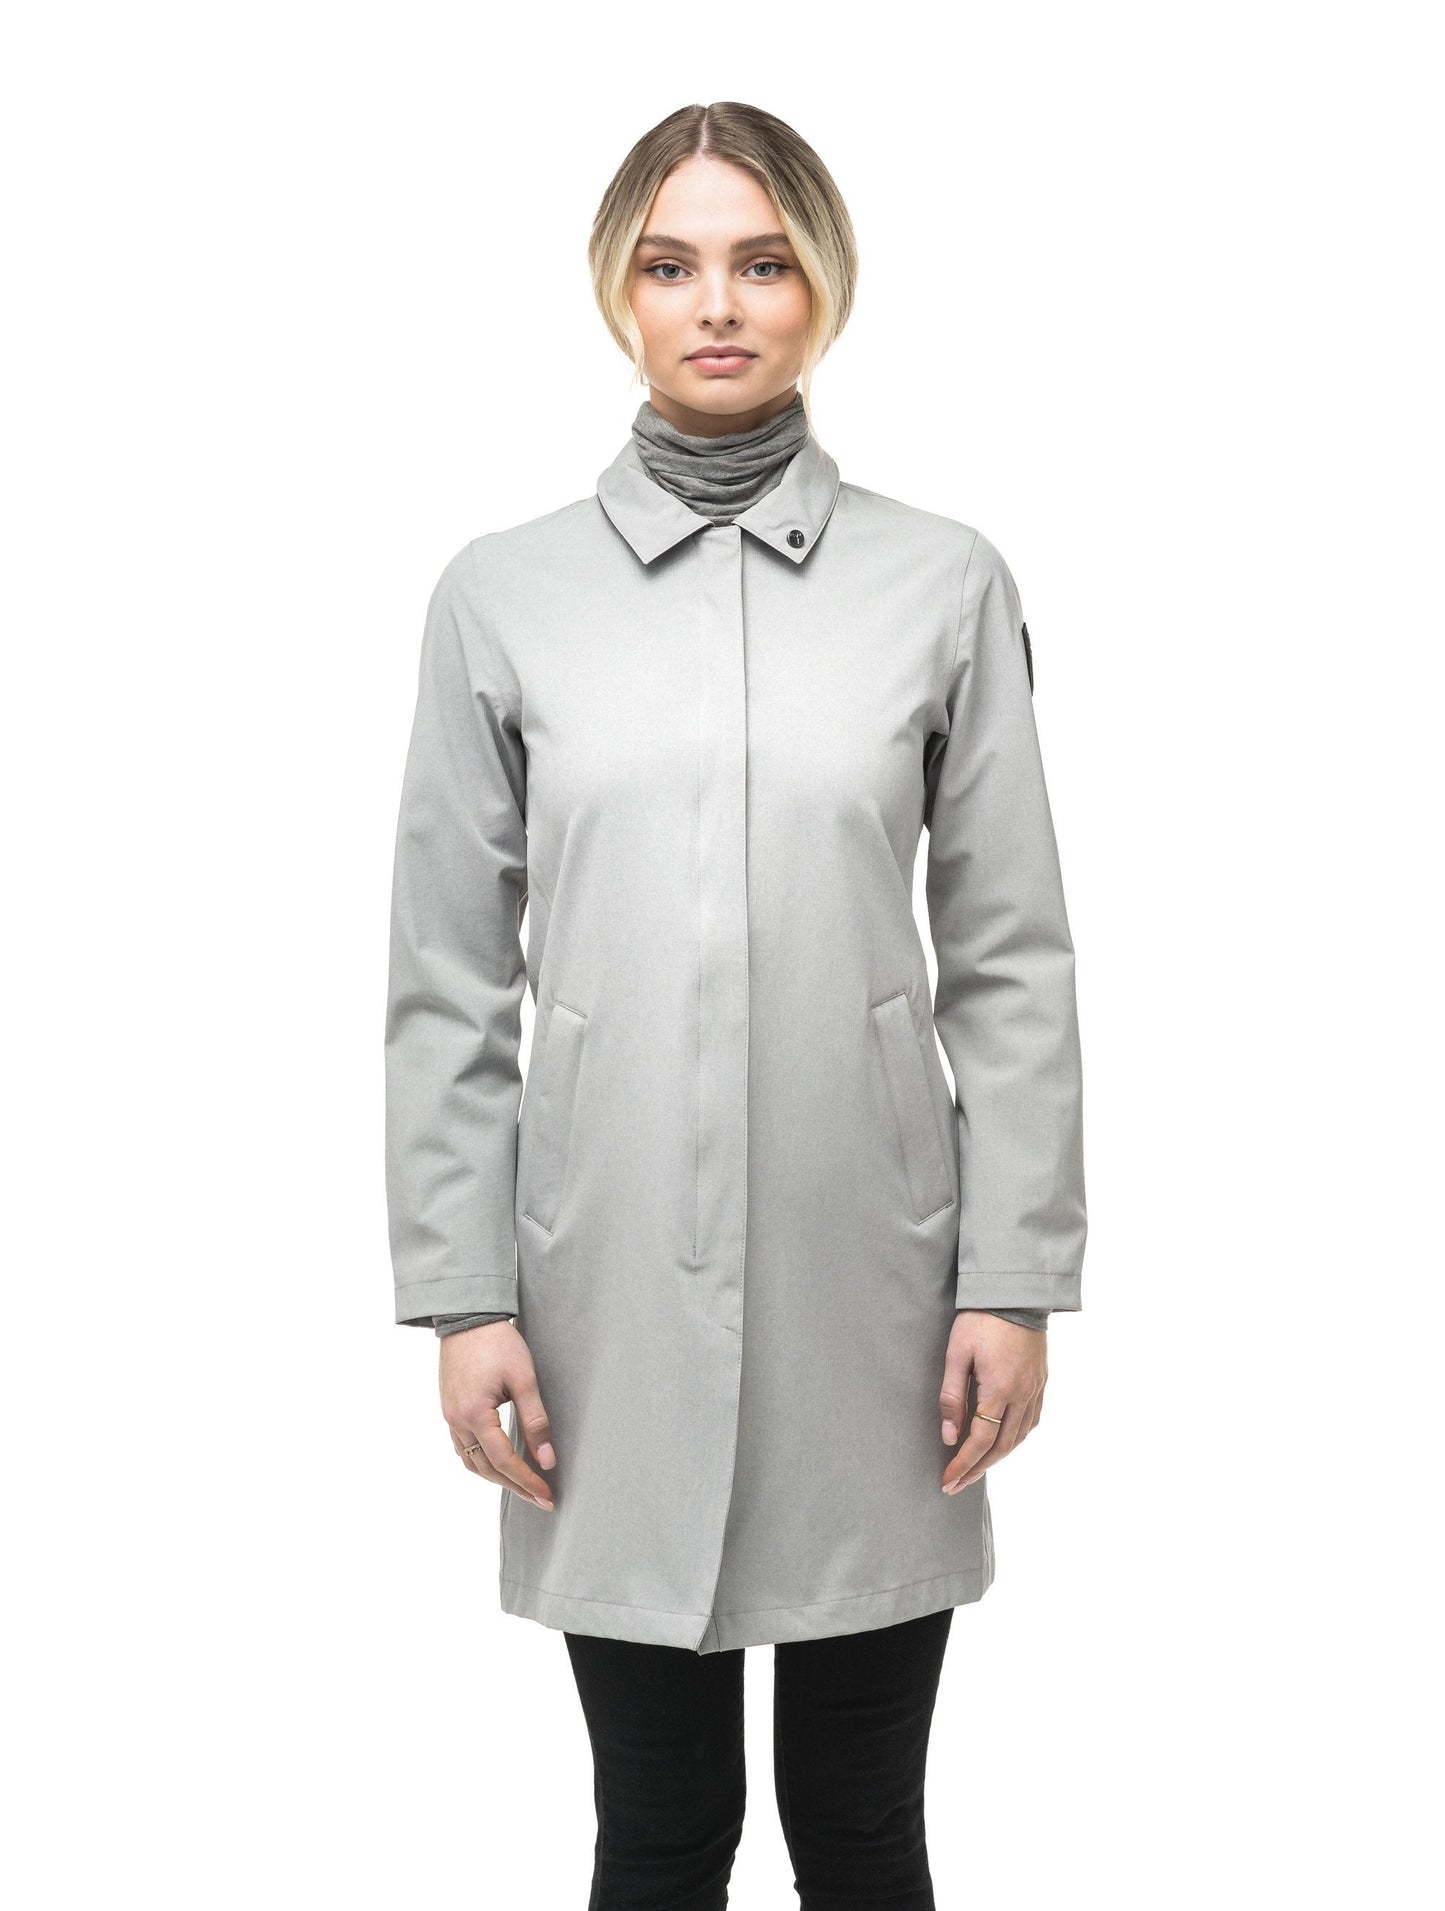 Women's thigh length collared rain jacket in Light Grey